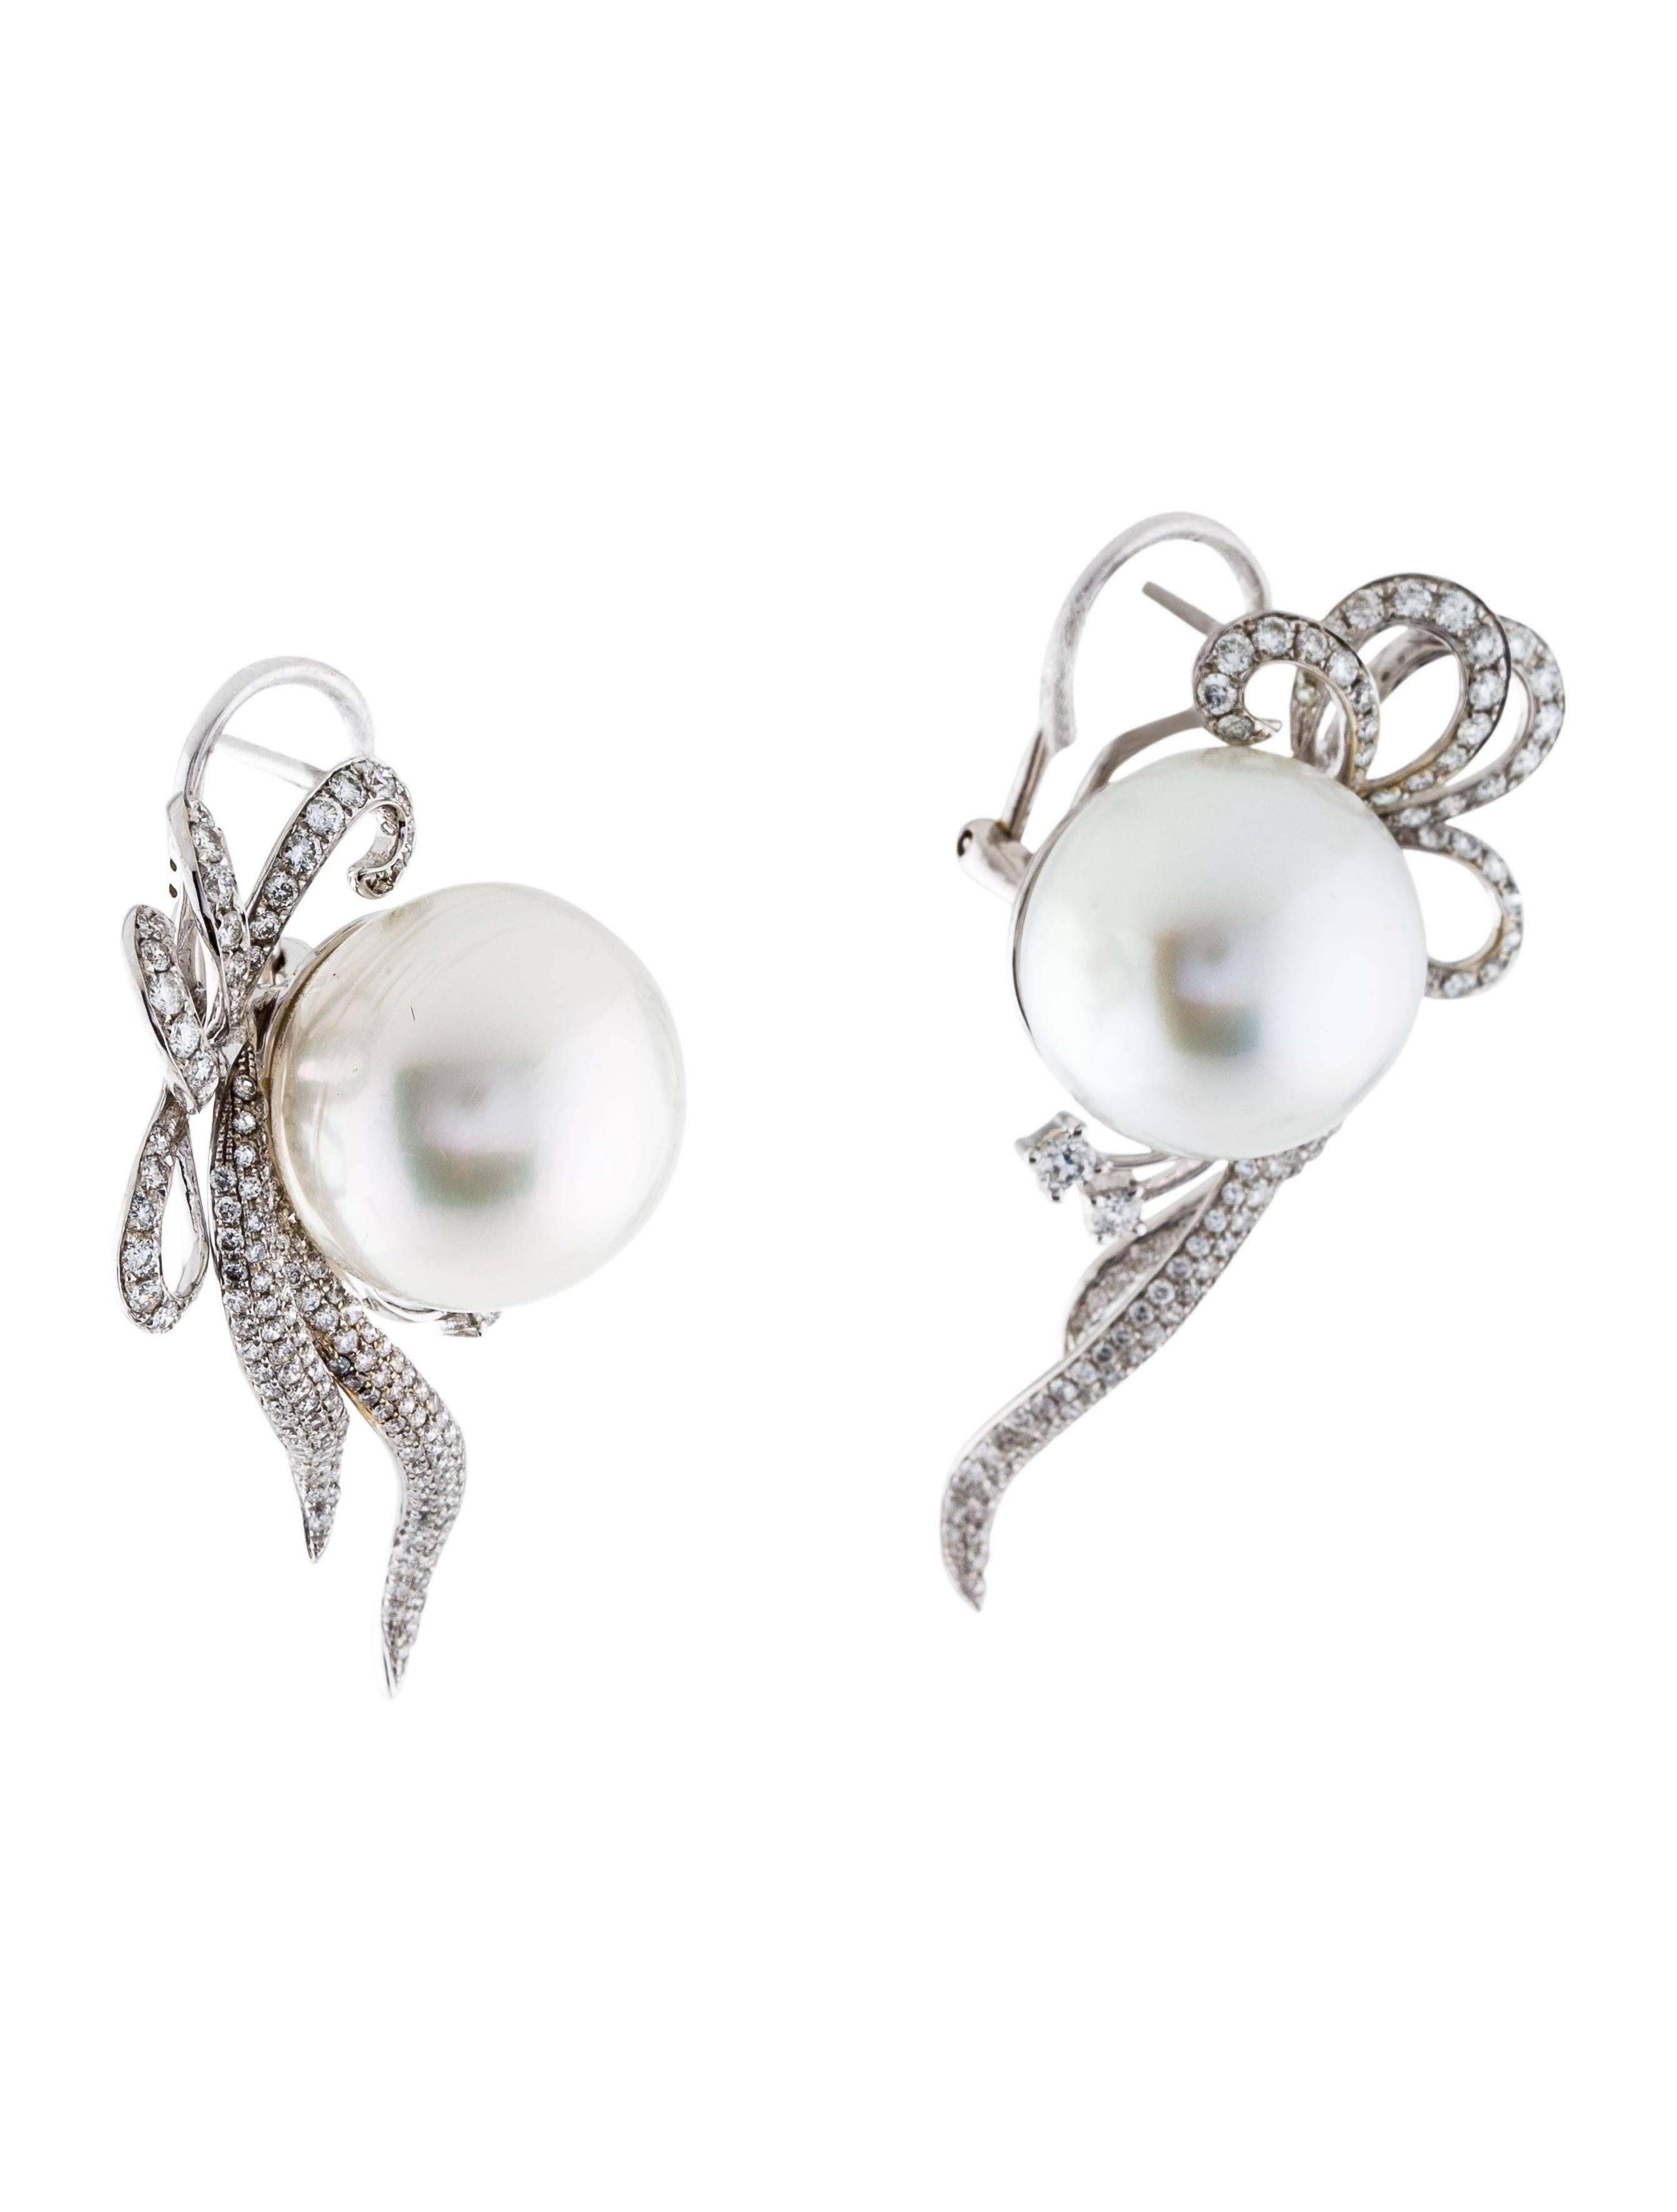 Stunning 18 Karat Gold 3.56 Carat Diamond Cultured Pearl Earrings 2